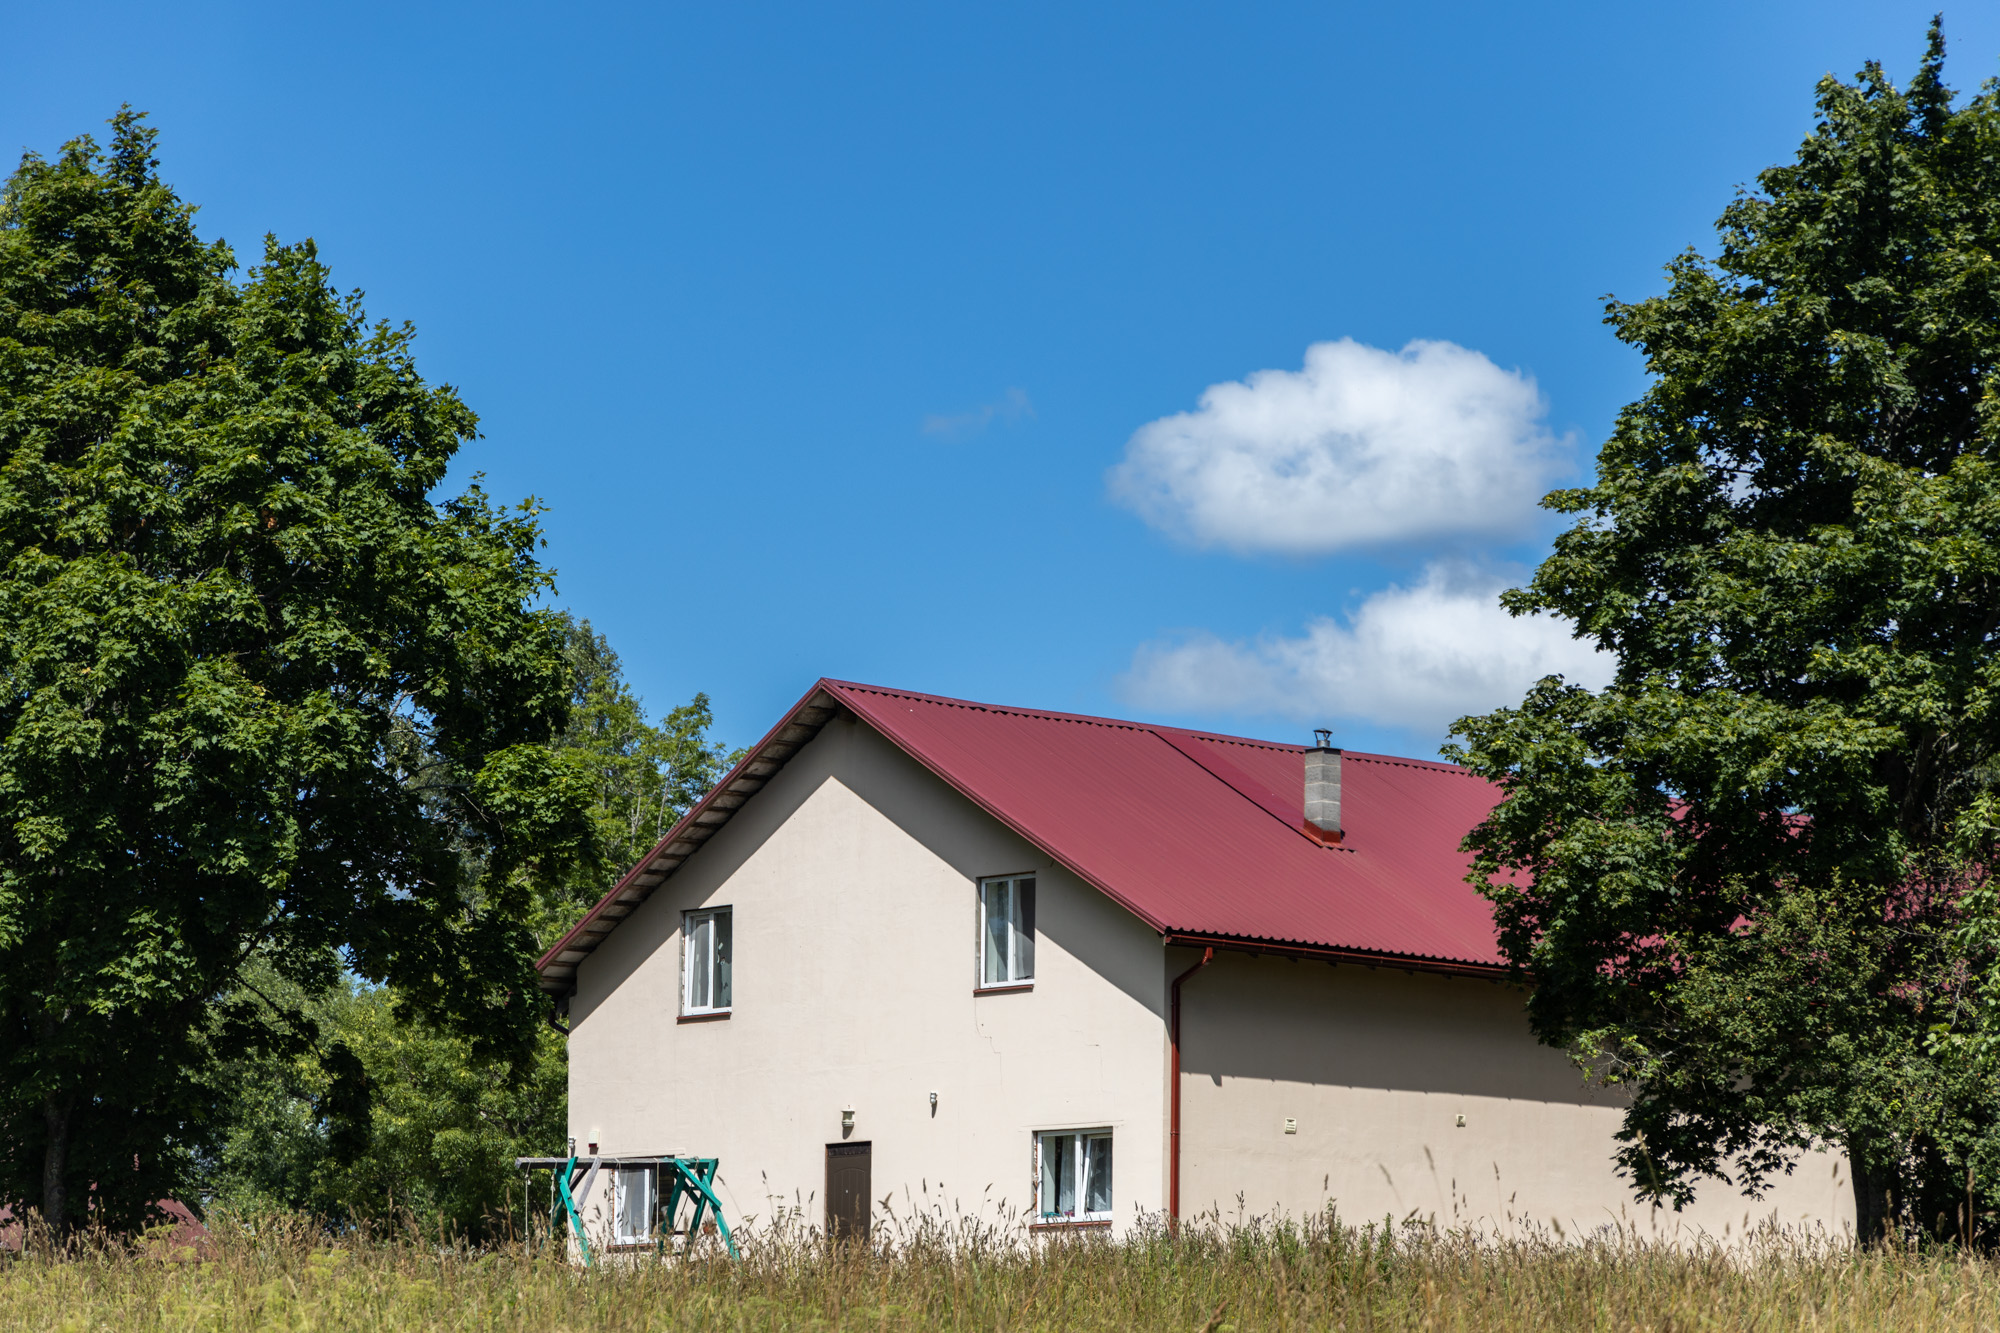 Investment property, Vireši - Image 1